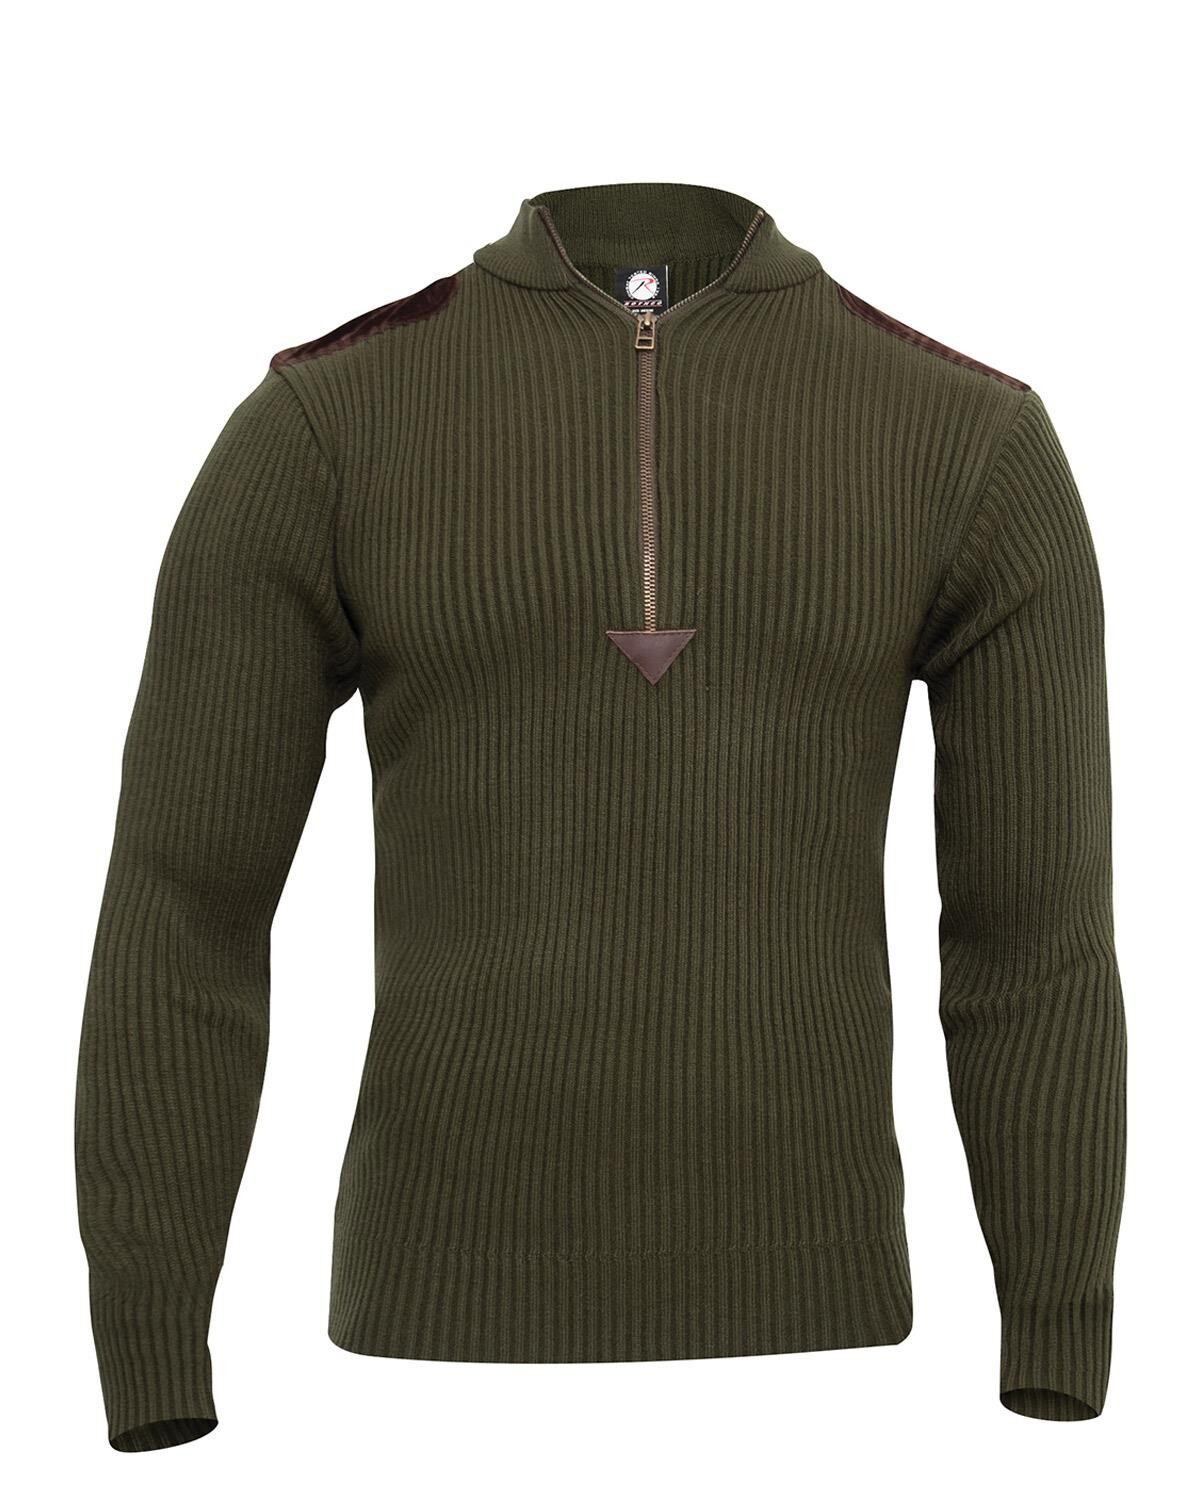 4: Rothco Commando Sweater (Oliven, S)